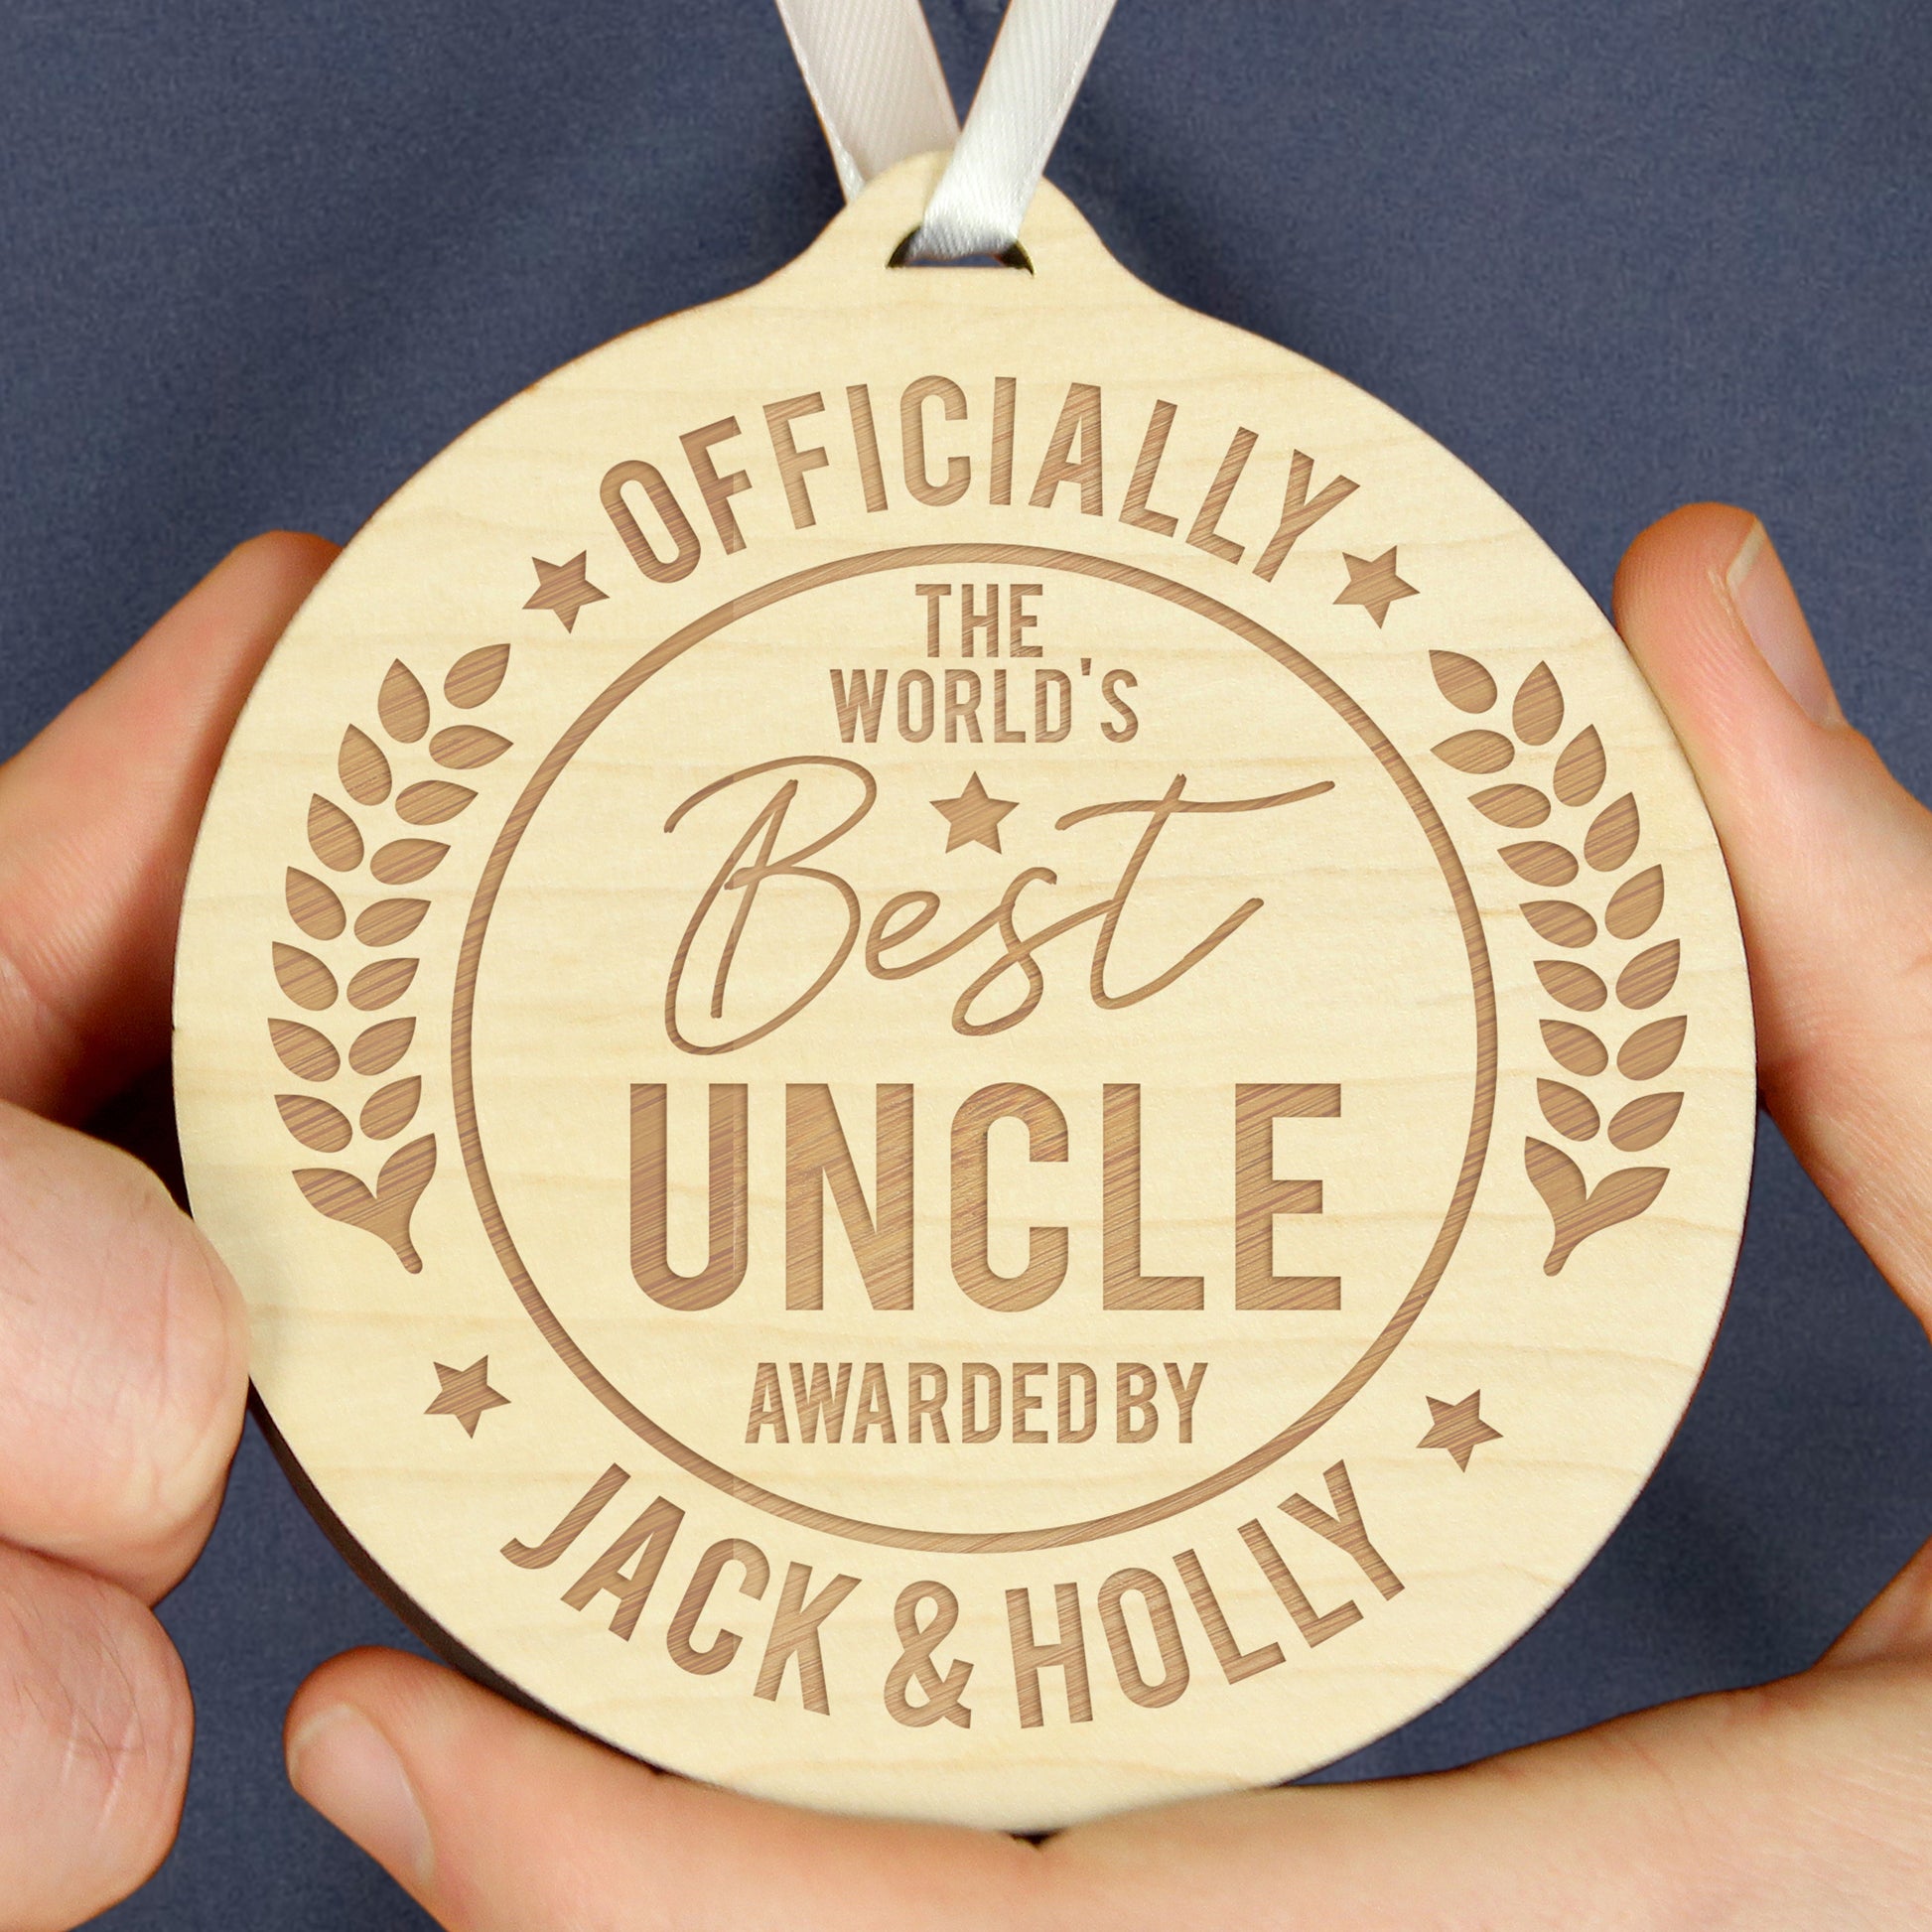 Personalised Wooden “Worlds Best” Medal - Violet Belle Gifts - Personalised Wooden “Worlds Best” Medal